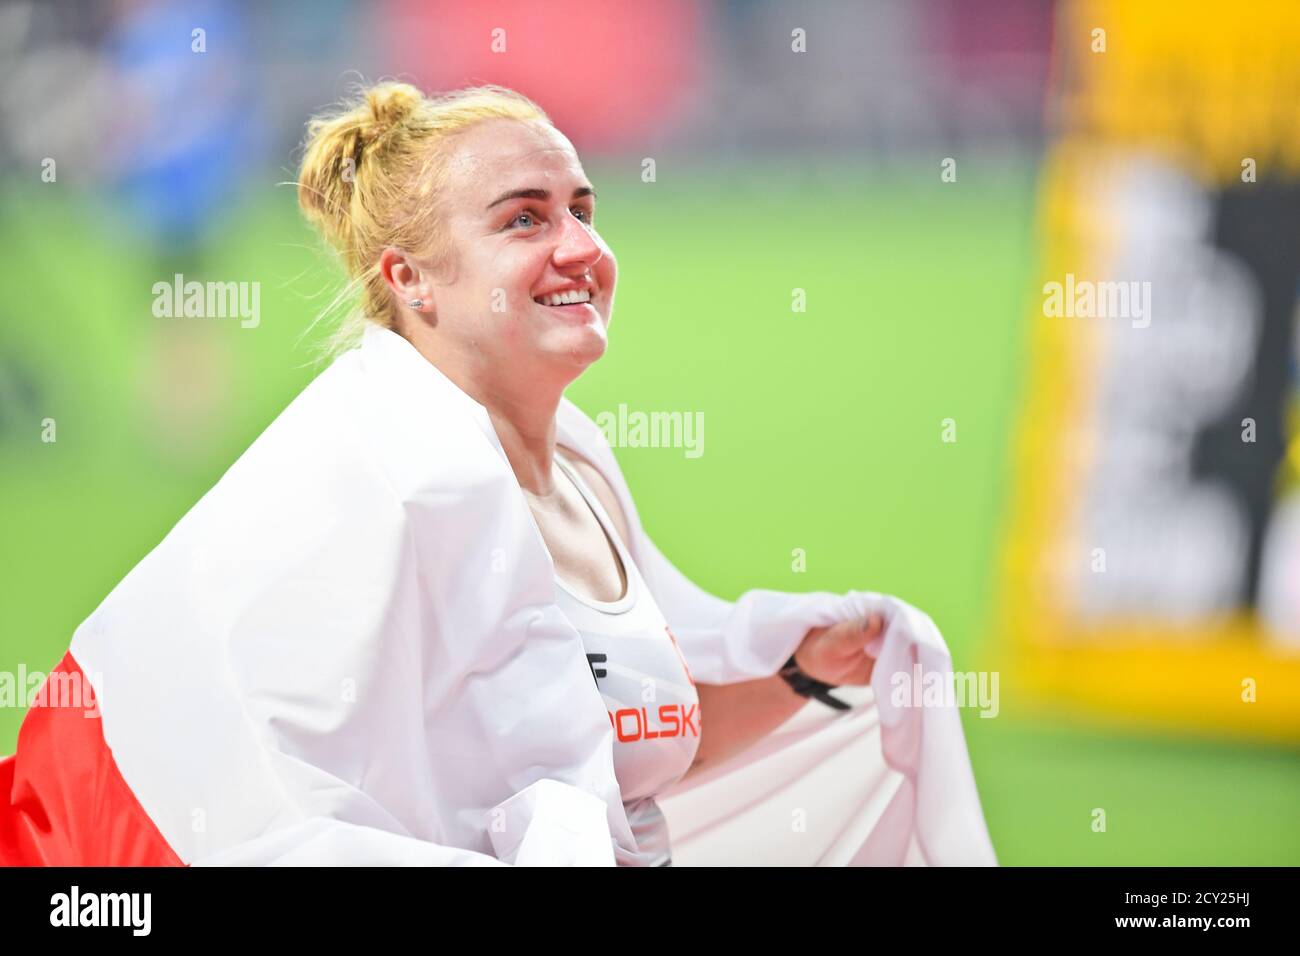 Joanna Fiodorow (Polen). Hammer Throw Frauen Silbermedaille. IAAF Leichtathletik WM, Doha 2019 Stockfoto